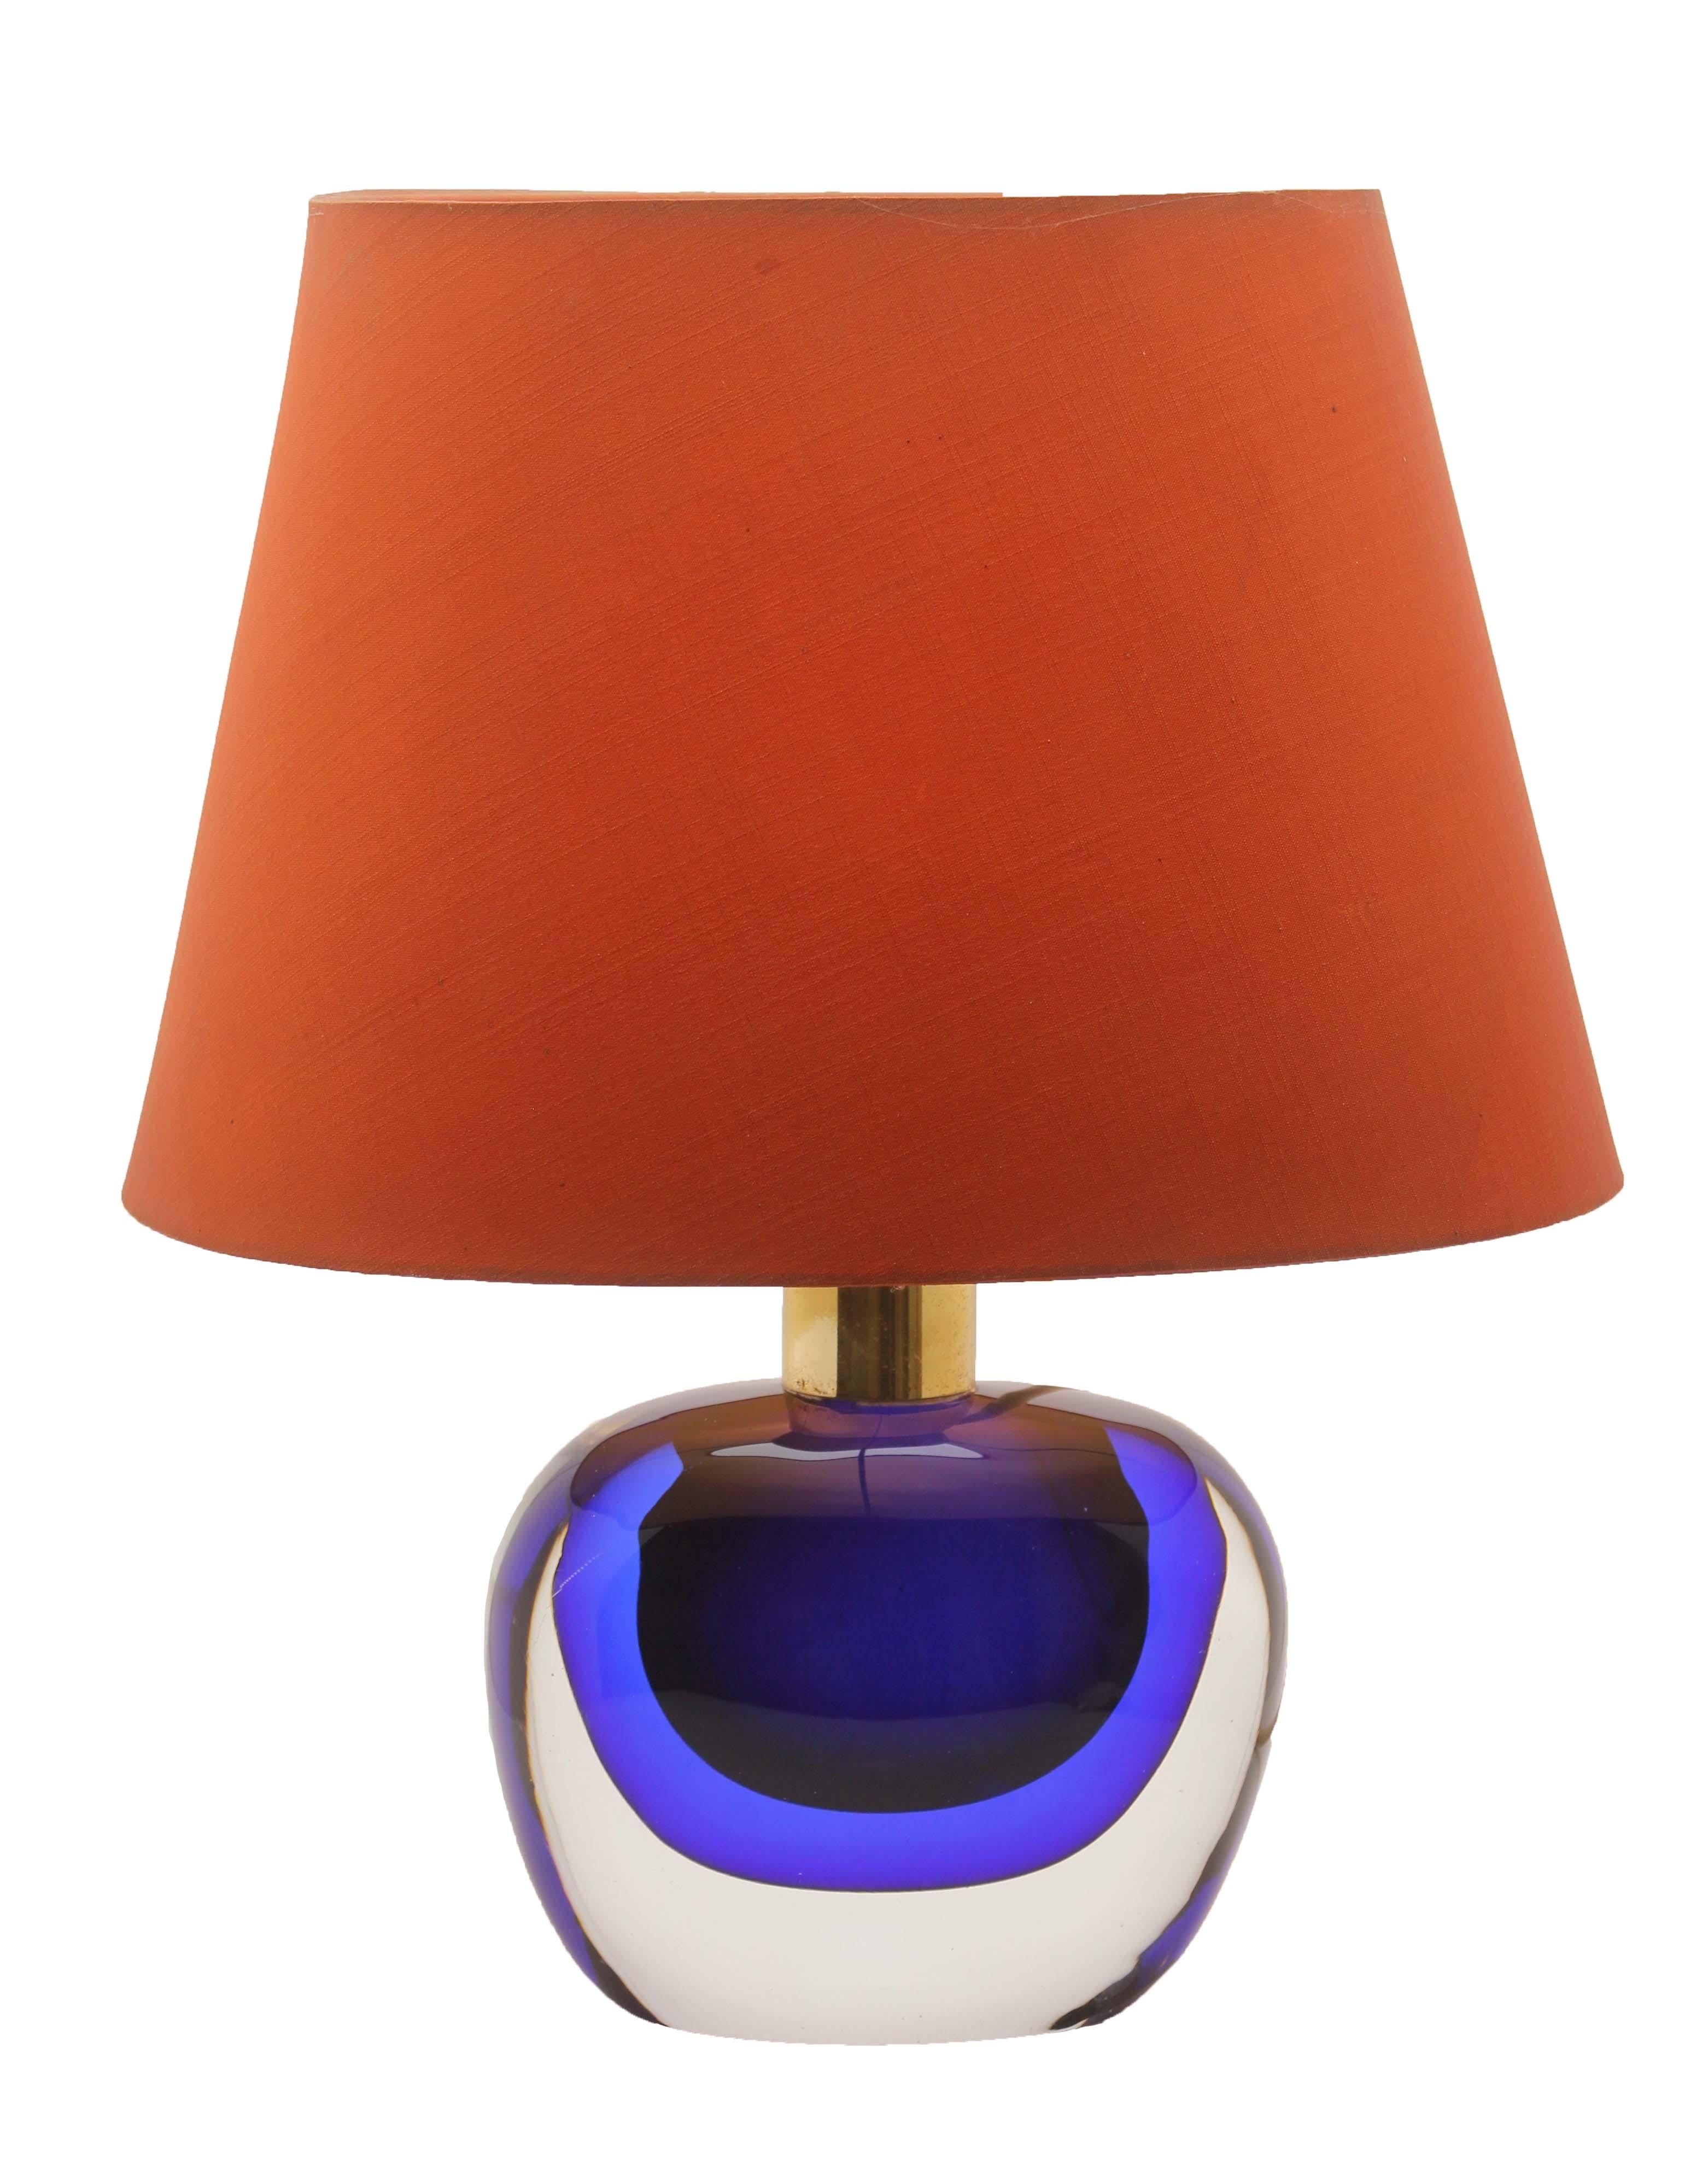 Mid-Century Modern Murano Globe-Shaped Lamp Cobalt Blue with a Dramatic Jewel-Like Effect